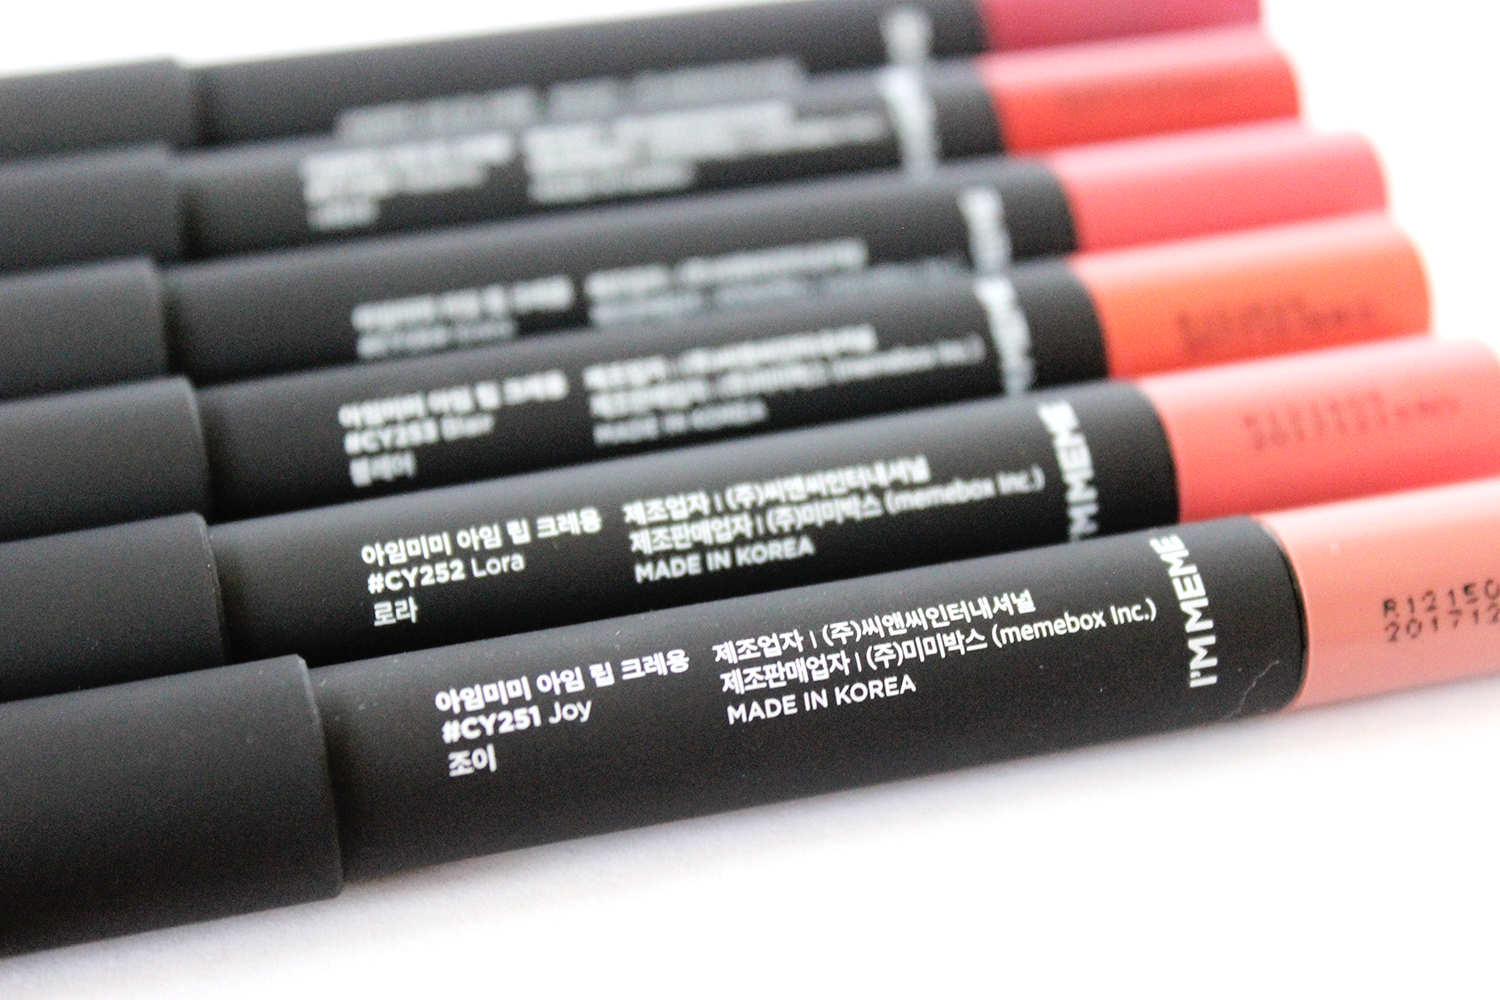 MAC Oh Honey Velvetease Lip Pencil Review & Swatches